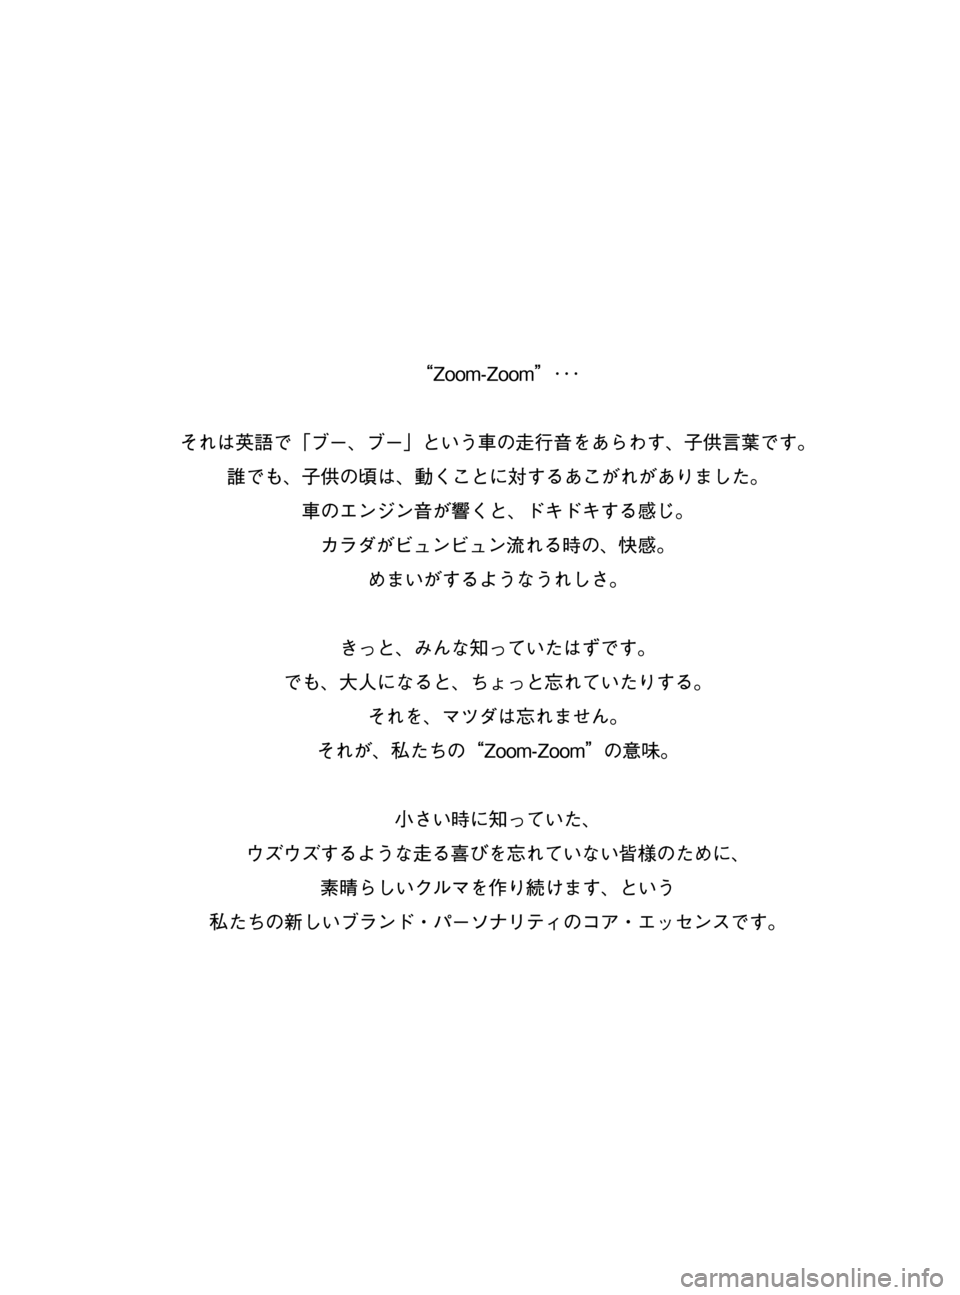 MAZDA MODEL BONGO VAN 2016  取扱説明書 (in Japanese) Black plate (1,1)
BONGO VAN_JJ_初版1ページ
2015年12月11日08:26 AM
Form No.JJ 